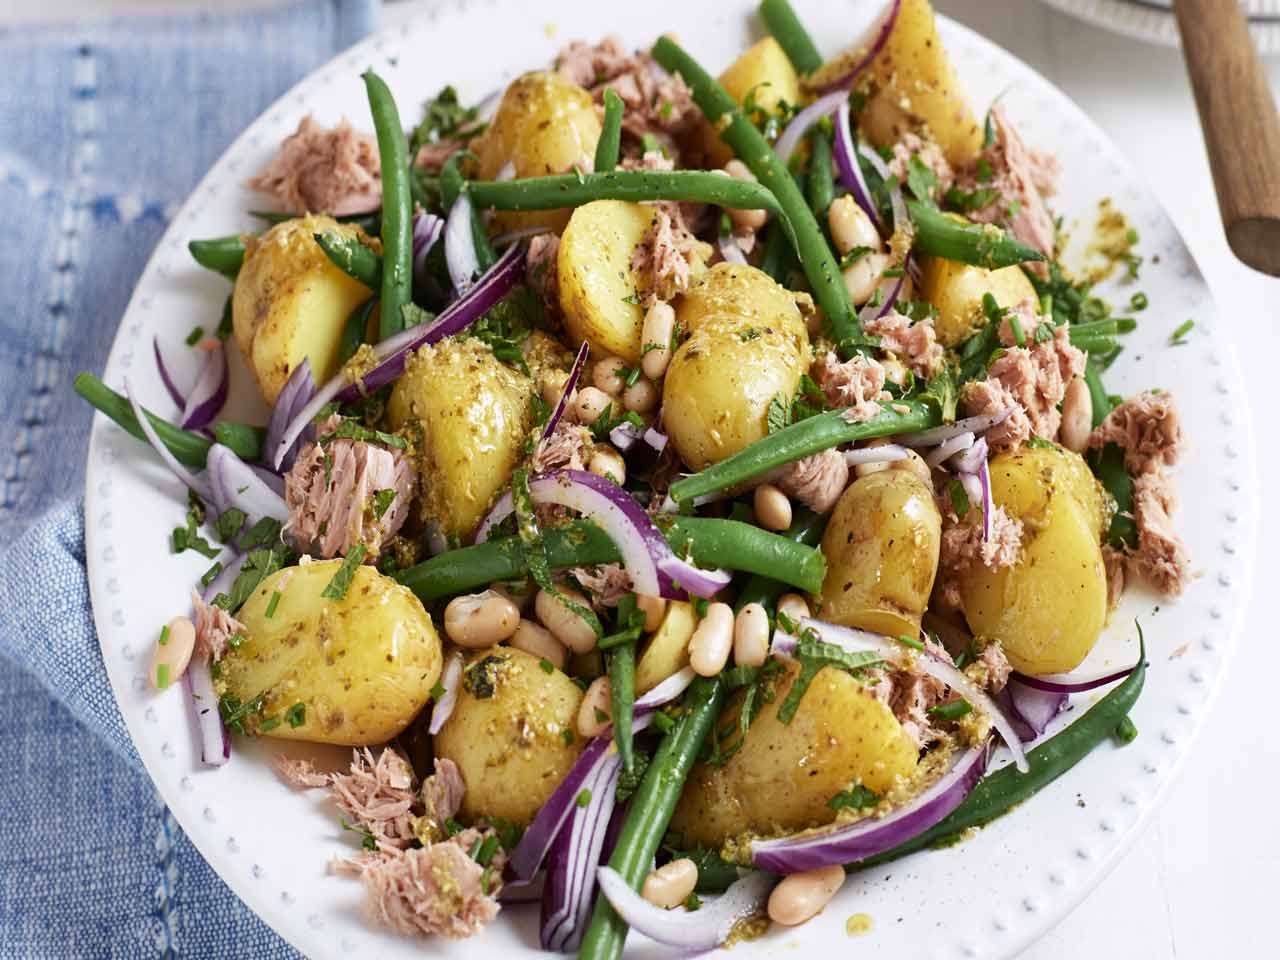 Herby pesto, tuna and potato salad